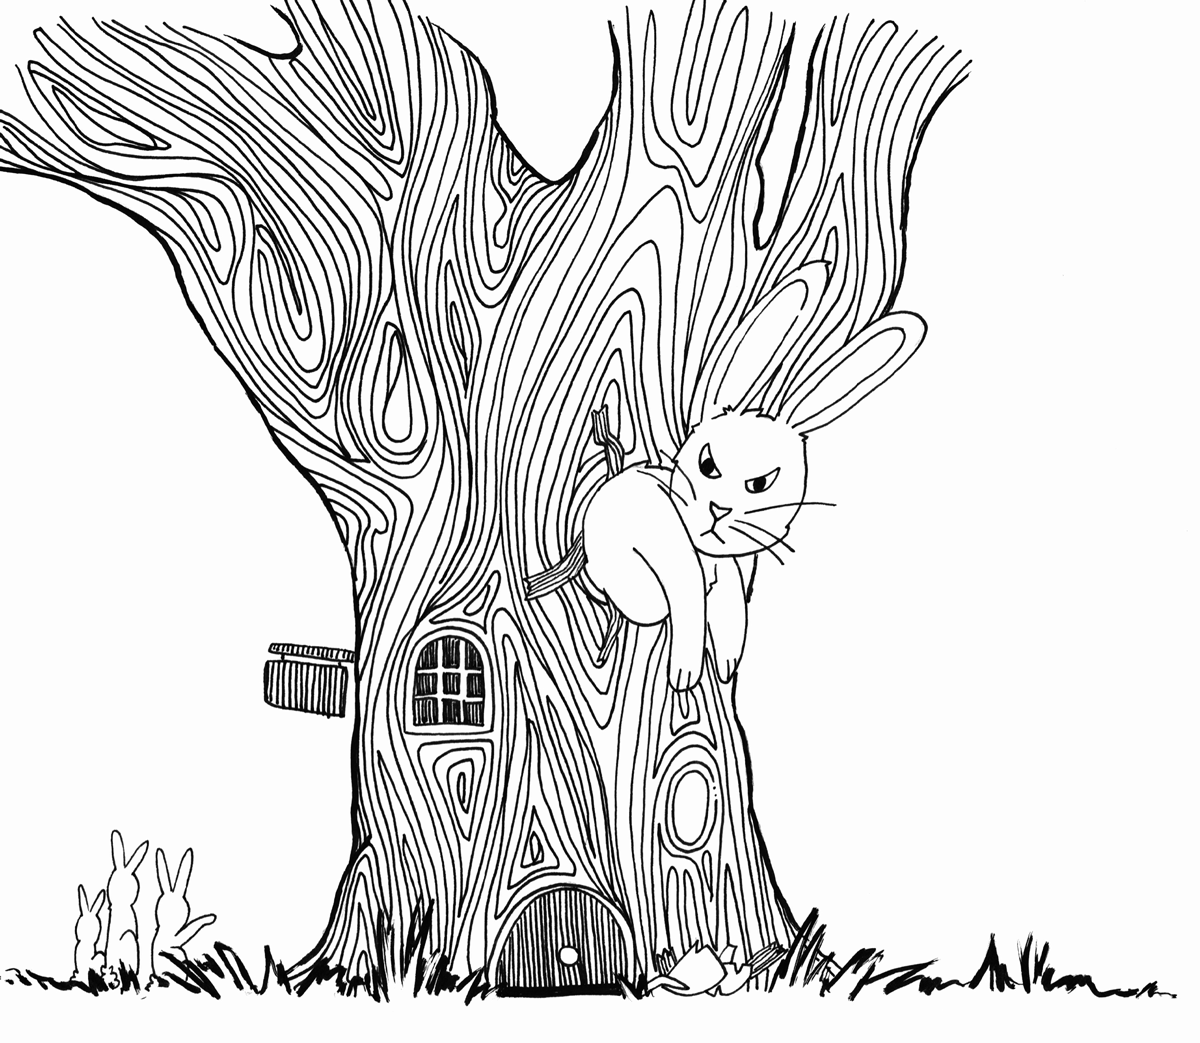 Ooster Bunny – Children’s Book Illustration